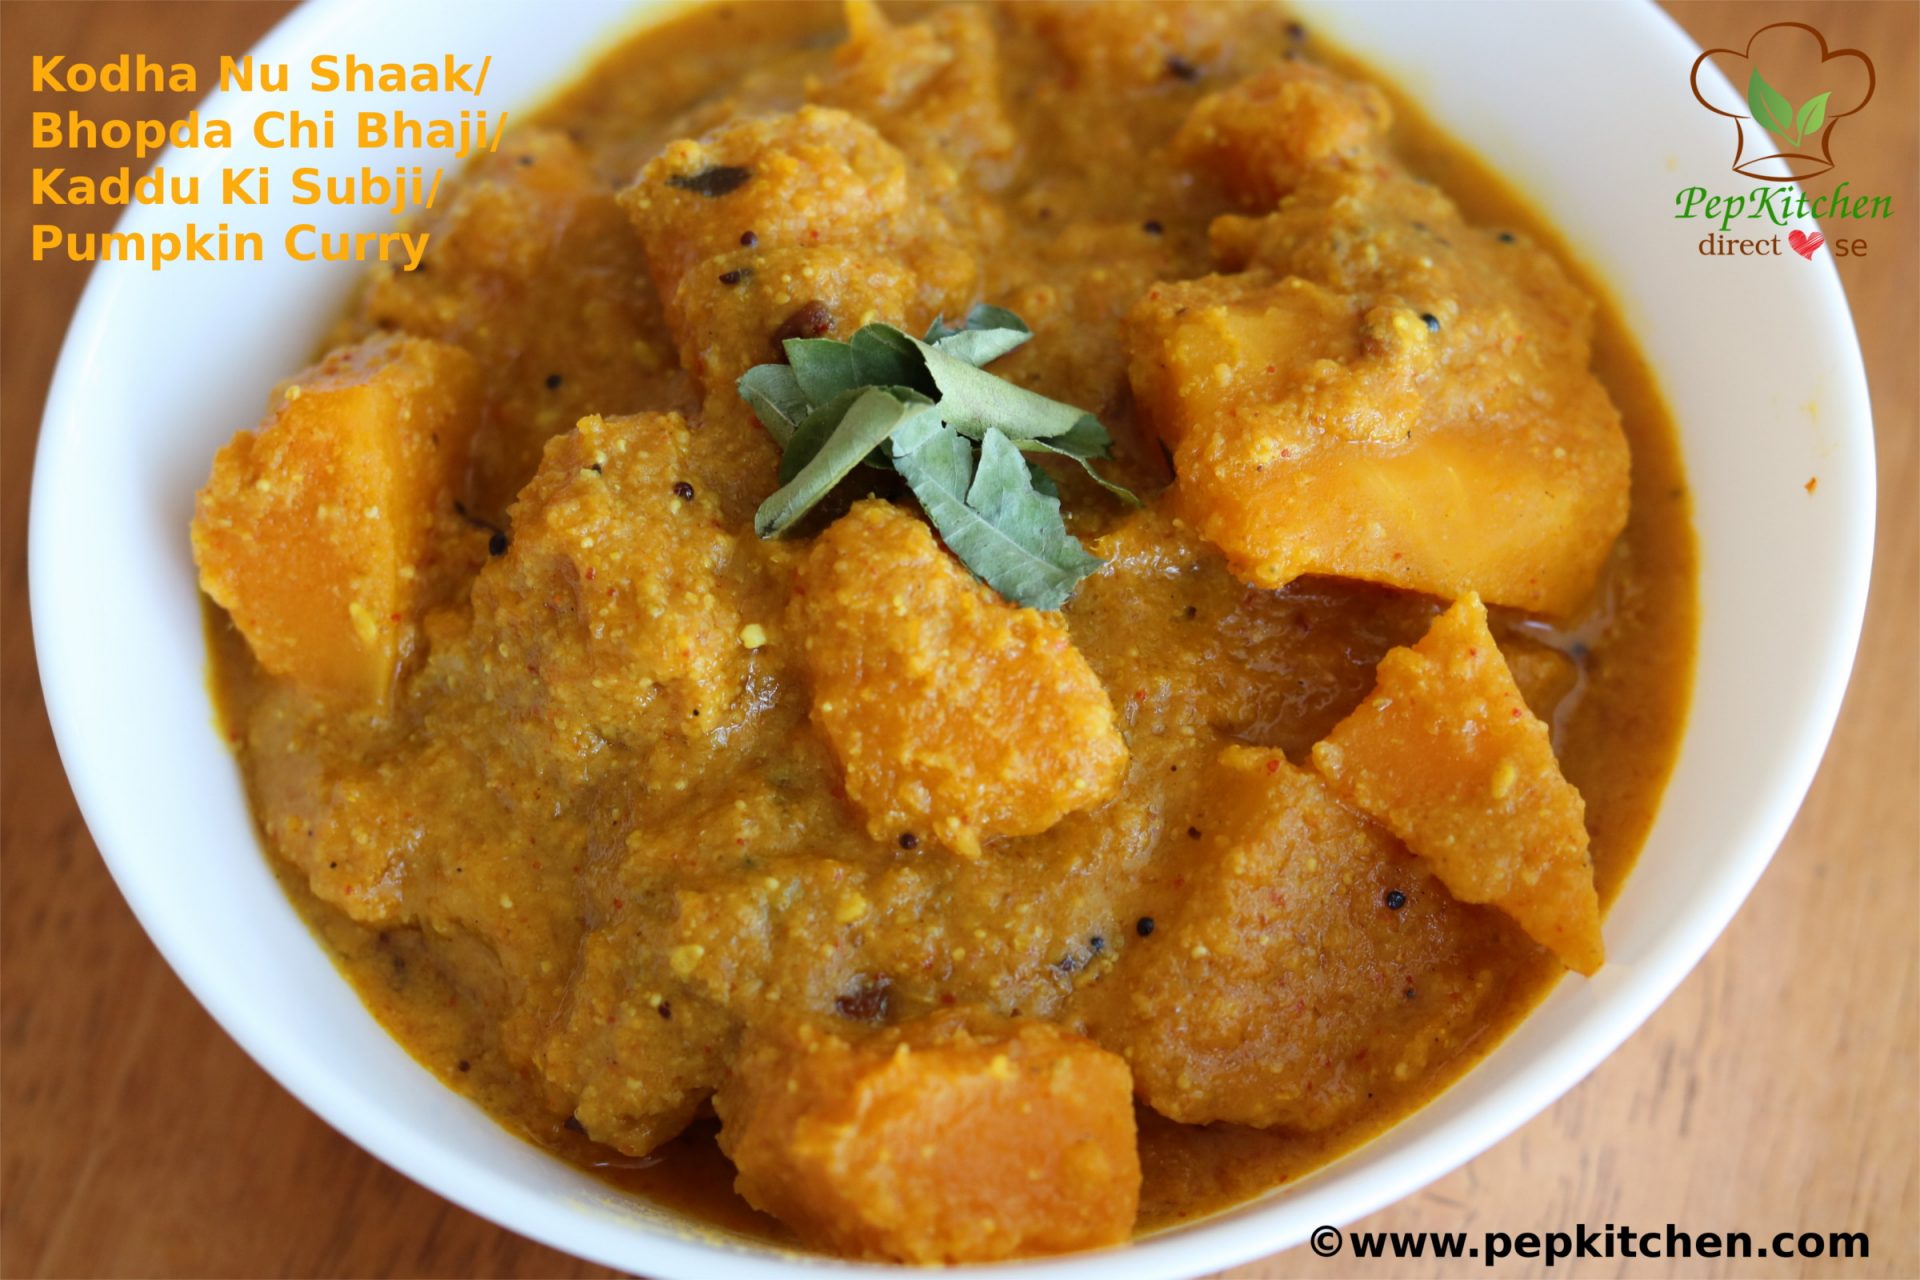 Kodha Nu Shaak/Bhopda Chi Bhaji/Kaddu Ki Subji/Pumpkin Curry